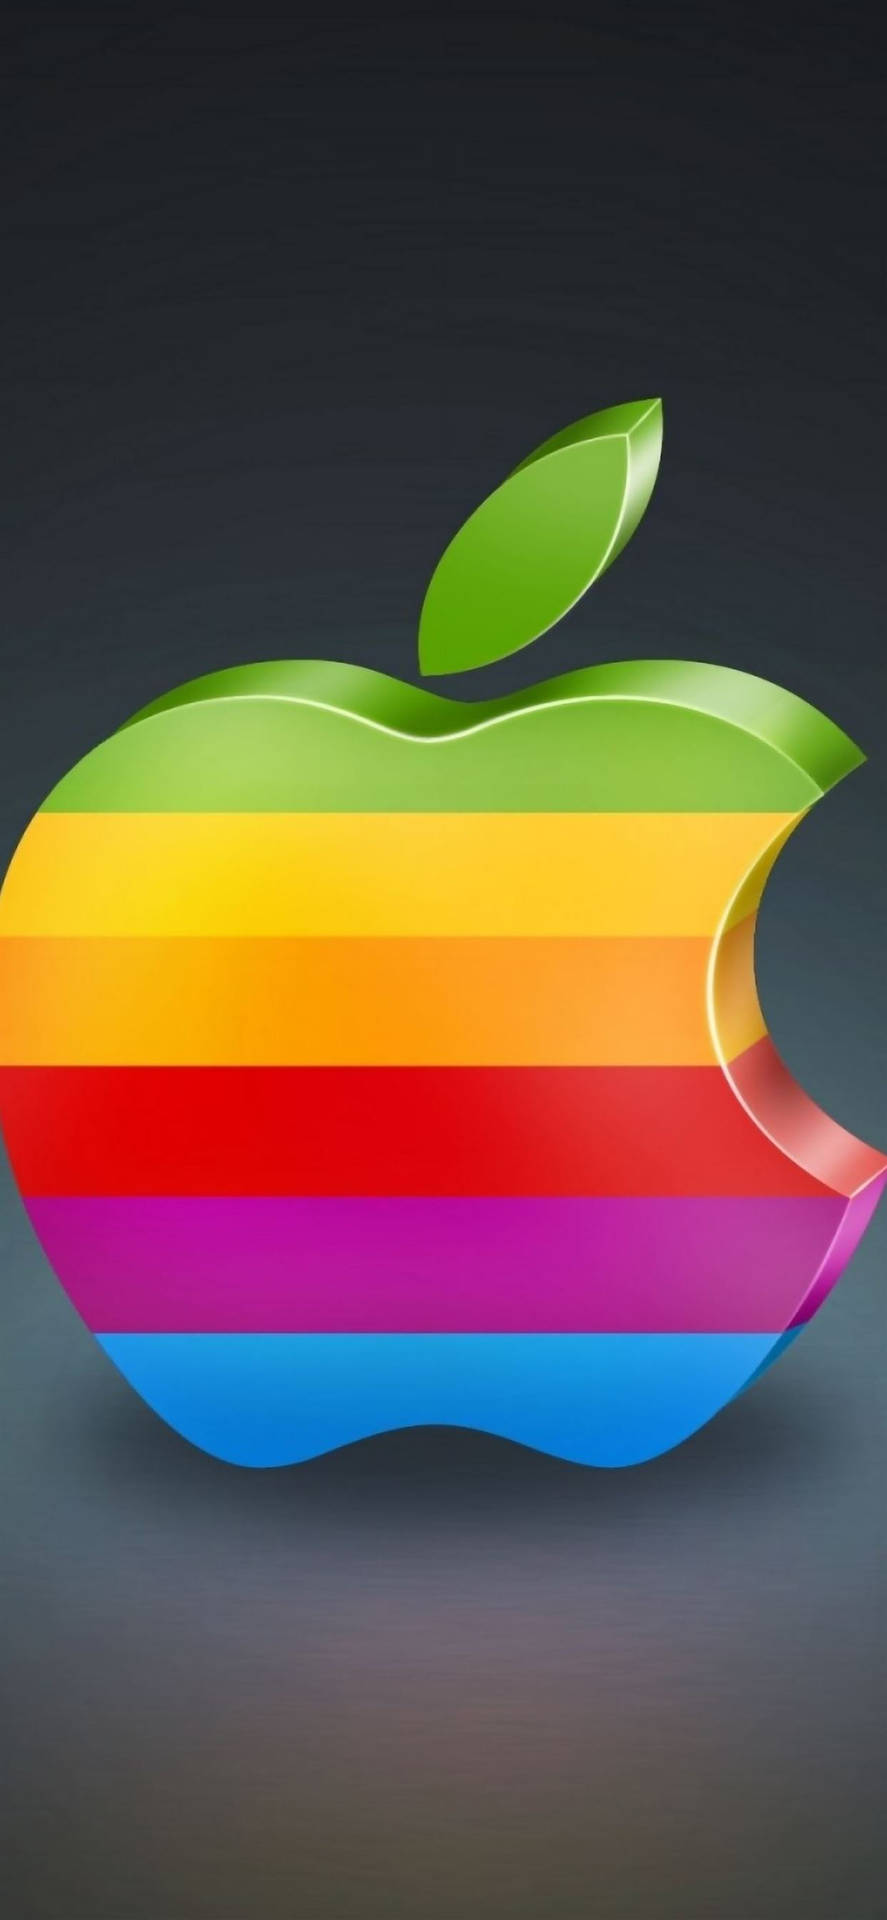 Download Rainbow 3d Apple Iphone Logo Wallpaper | Wallpapers.com